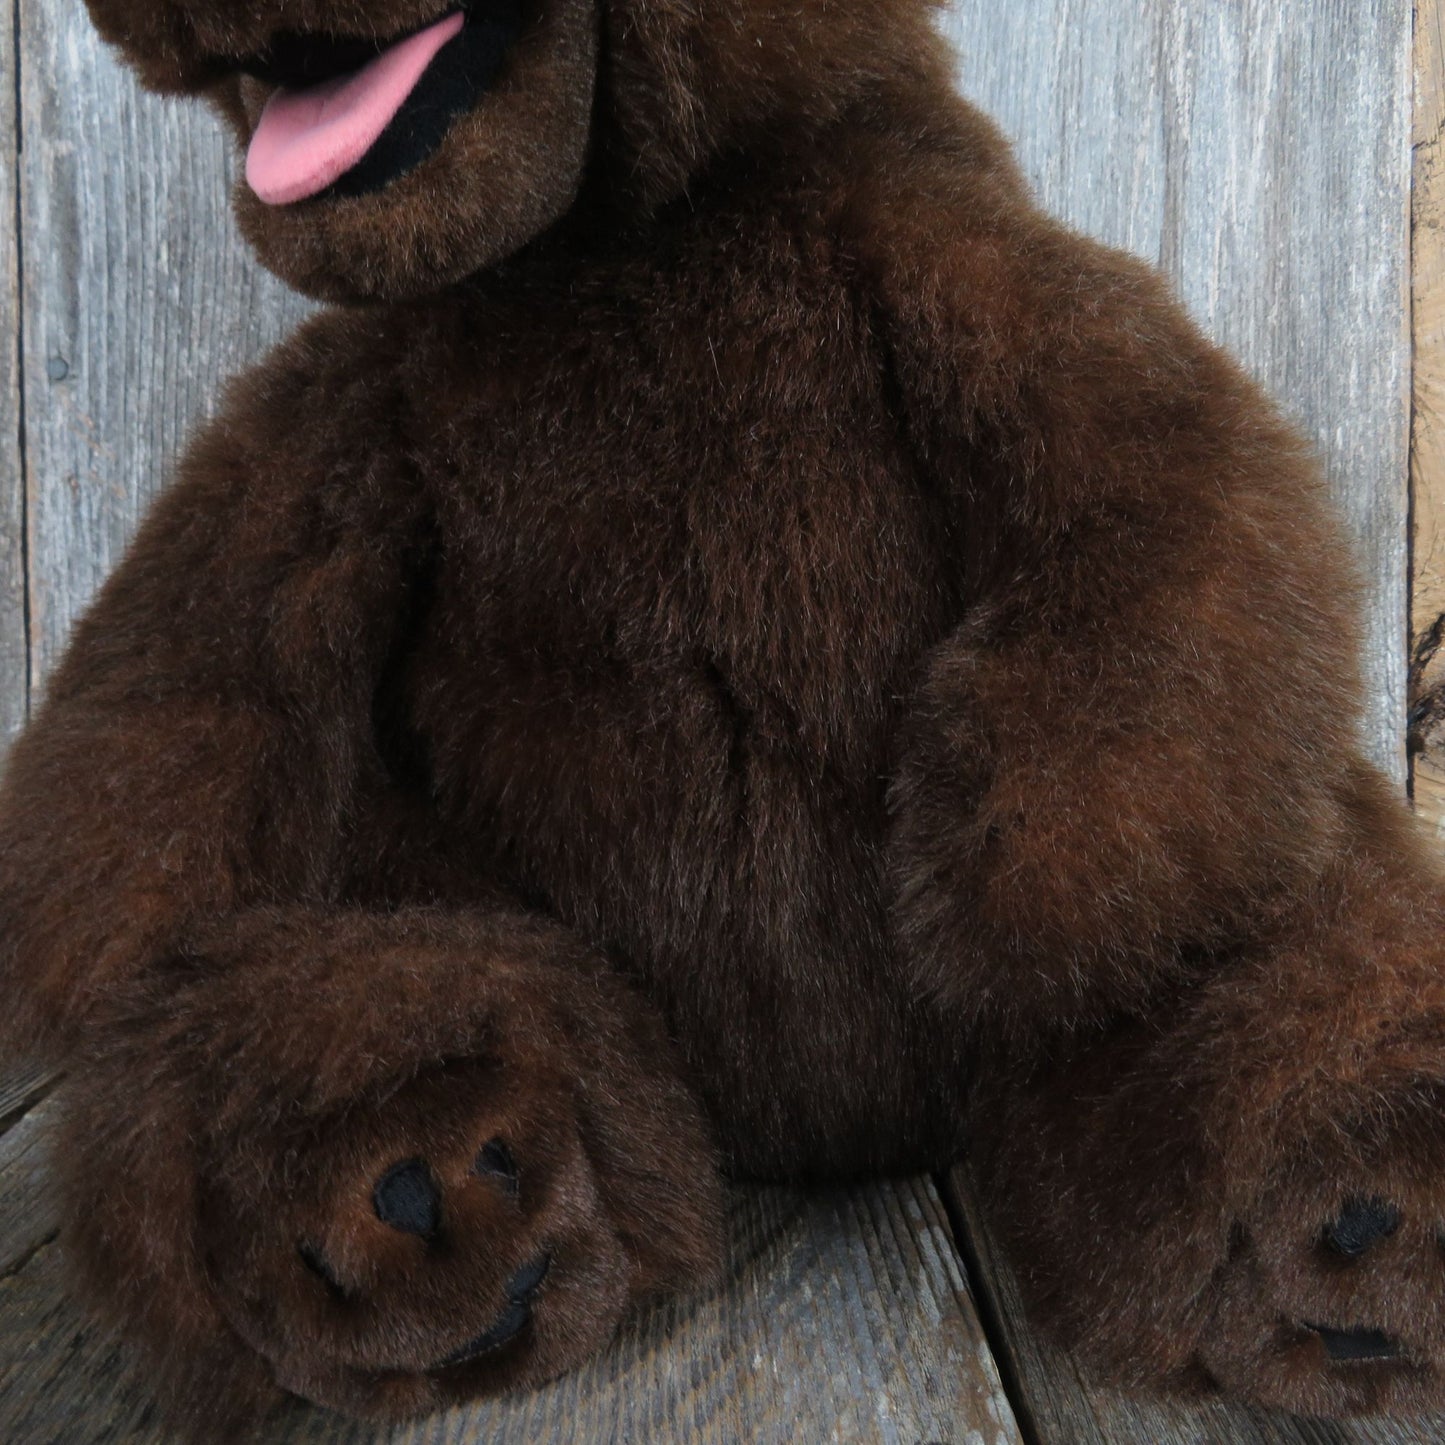 Brown Grizzly Bear Plush Puppet Disney Hidden Mickey Stuffed Animal Full Body Lifelike